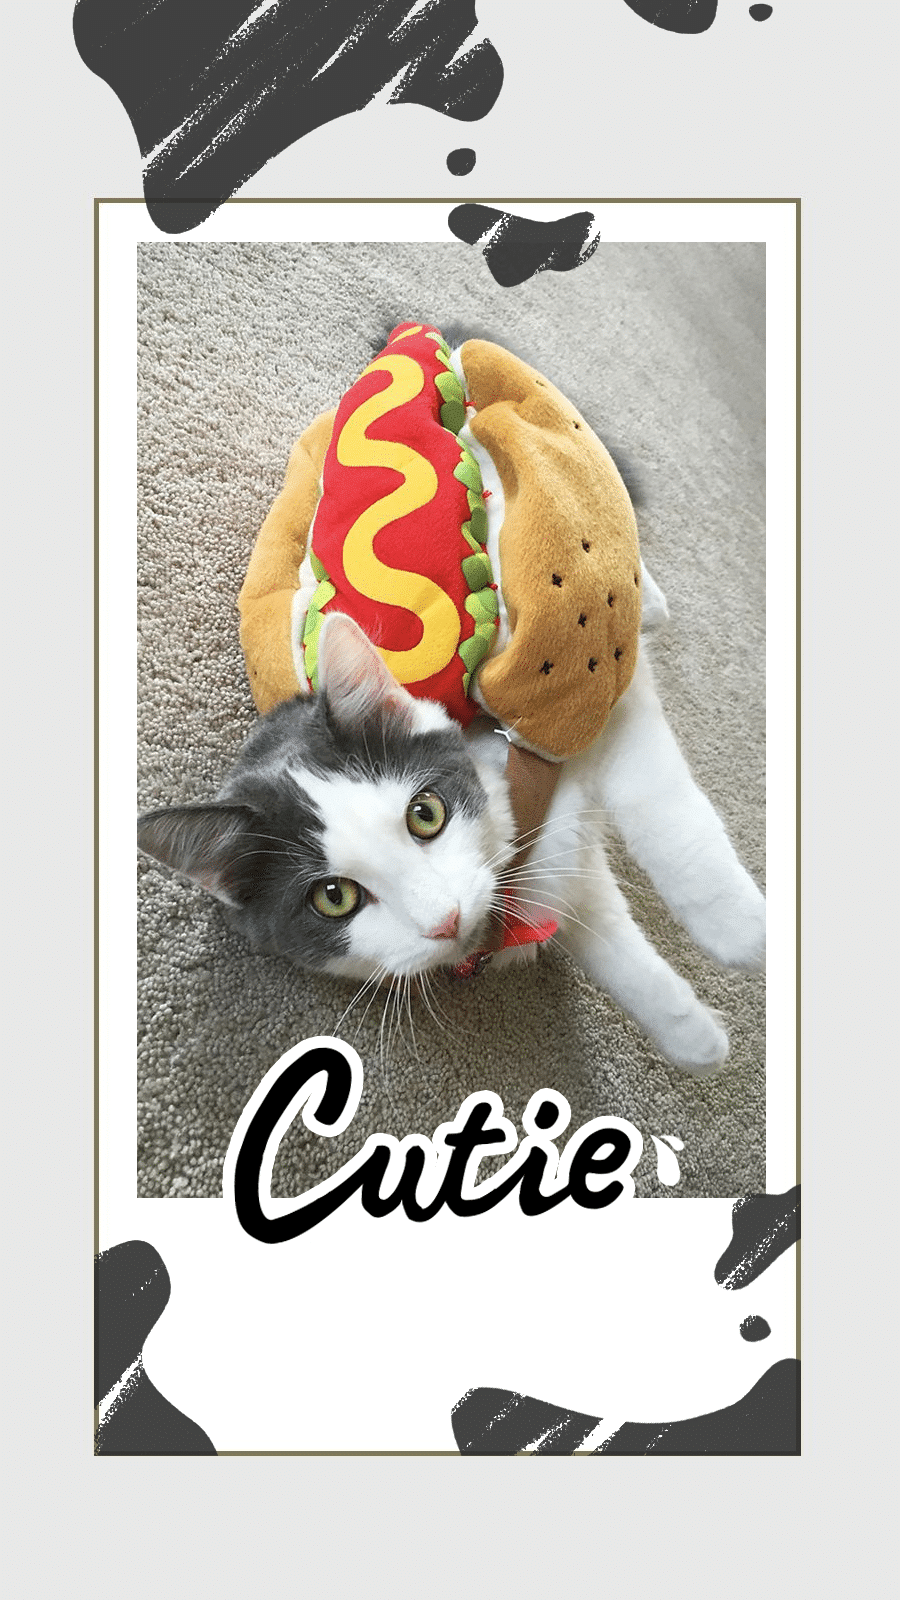 Cutie Cat Record Display Instagram Story预览效果